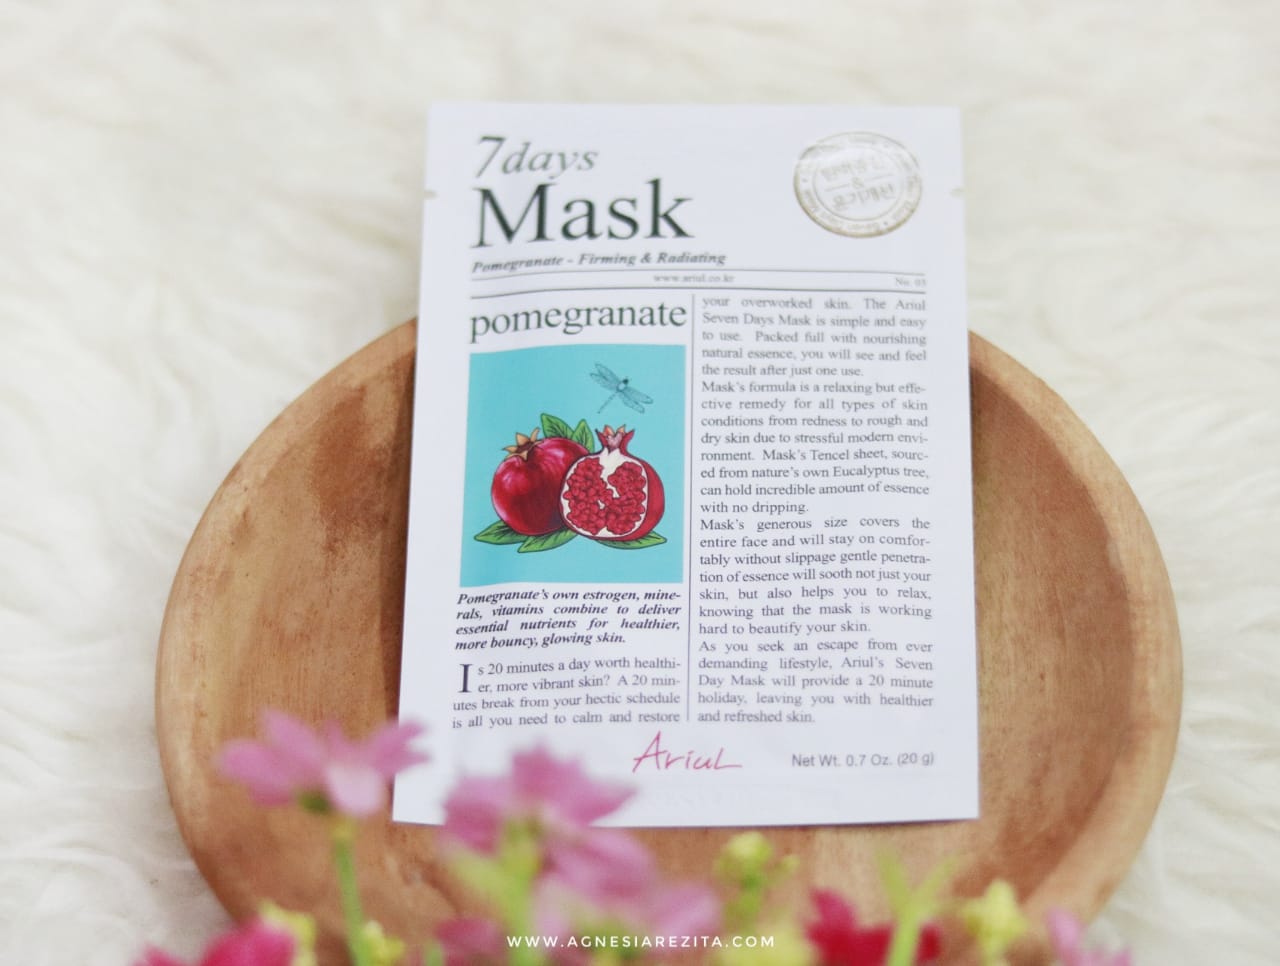 Ekel маска Pomegranate. Маски для лица 7 Days. Задоэр Плант Маск Помегранат. Маска даты и времени.